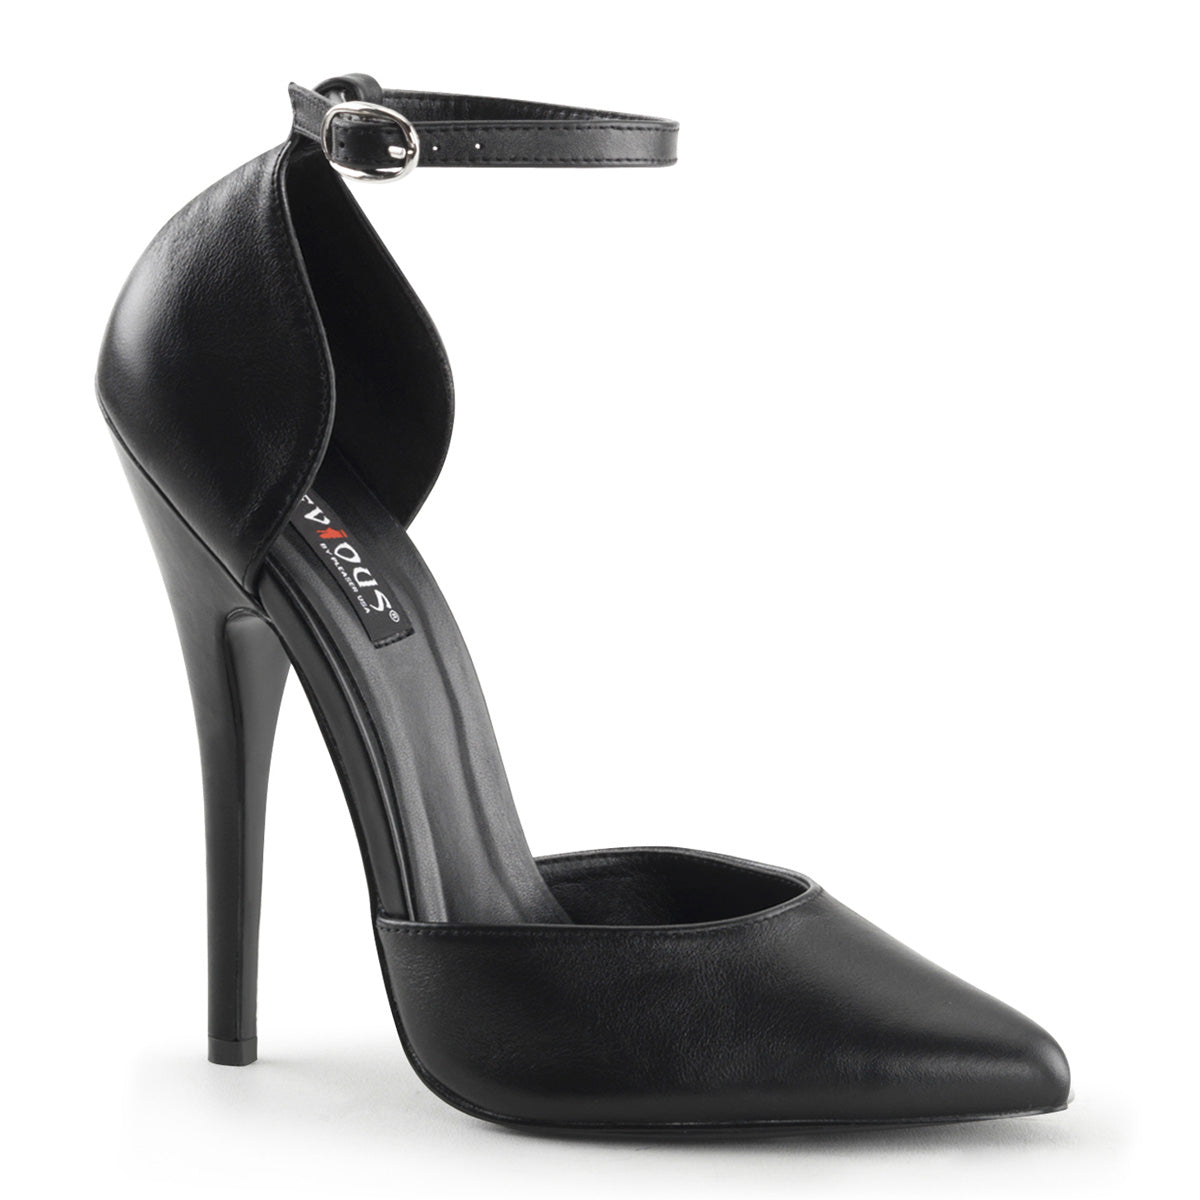 DOMINA 402 Devious 6 Inch Heel Black Leather Erotic Shoes Devious Heels